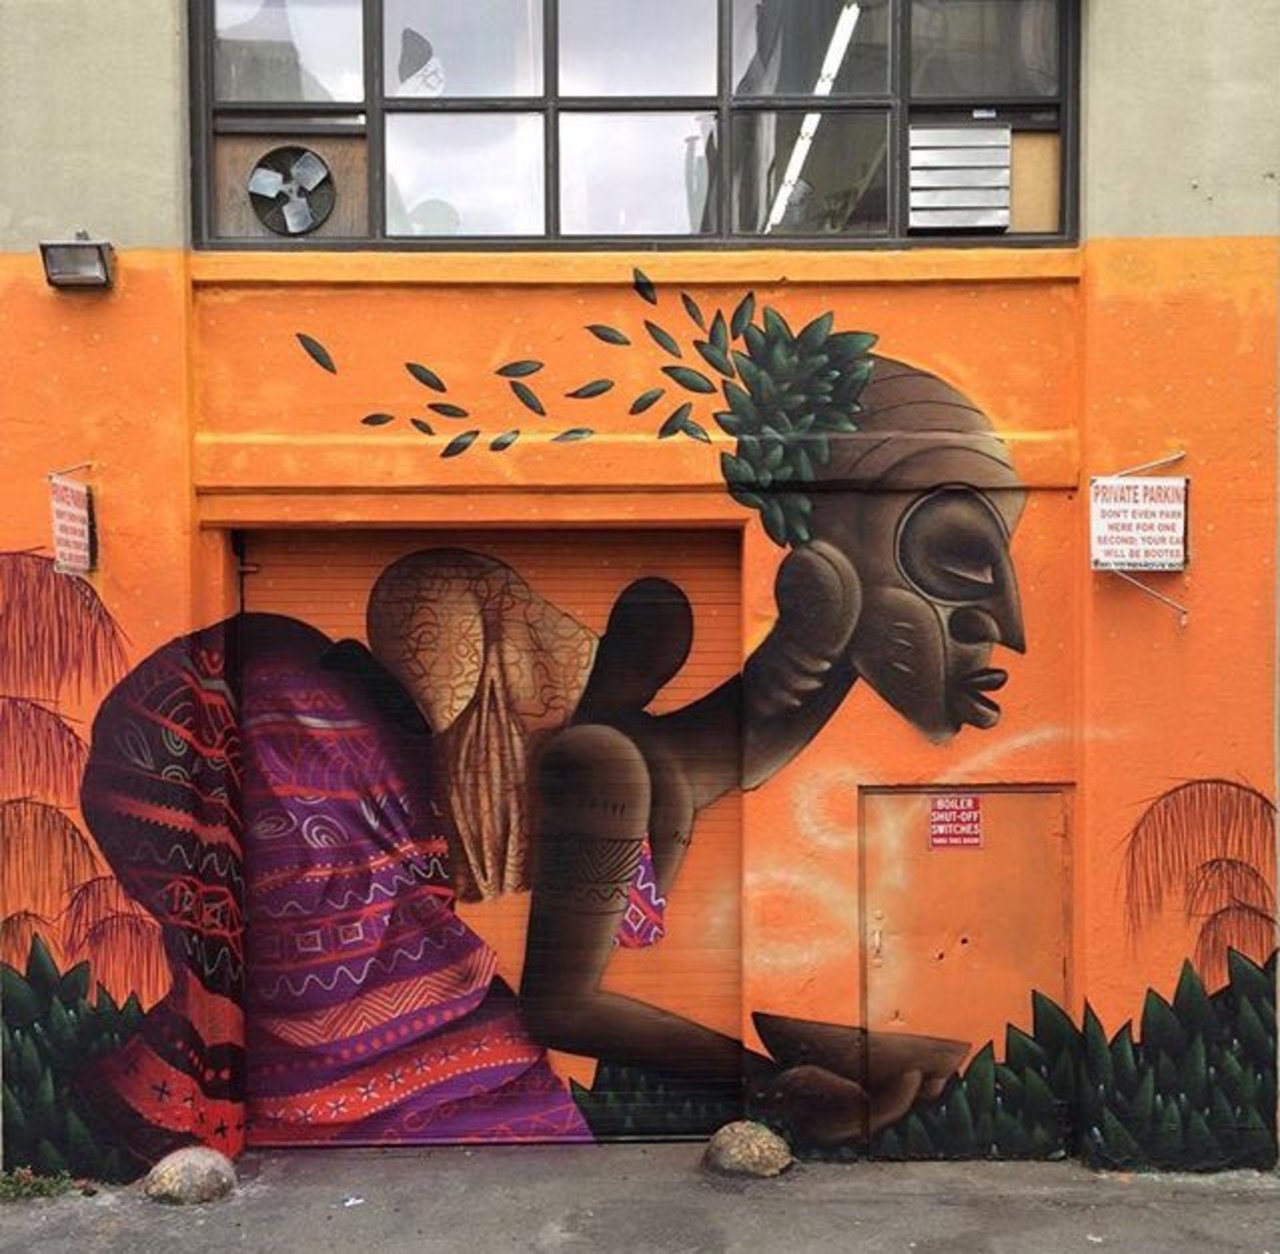 New Street Art by Alexandre Keto in NYC 

#art #graffiti #mural #streetart https://t.co/oMgBX8eLoe